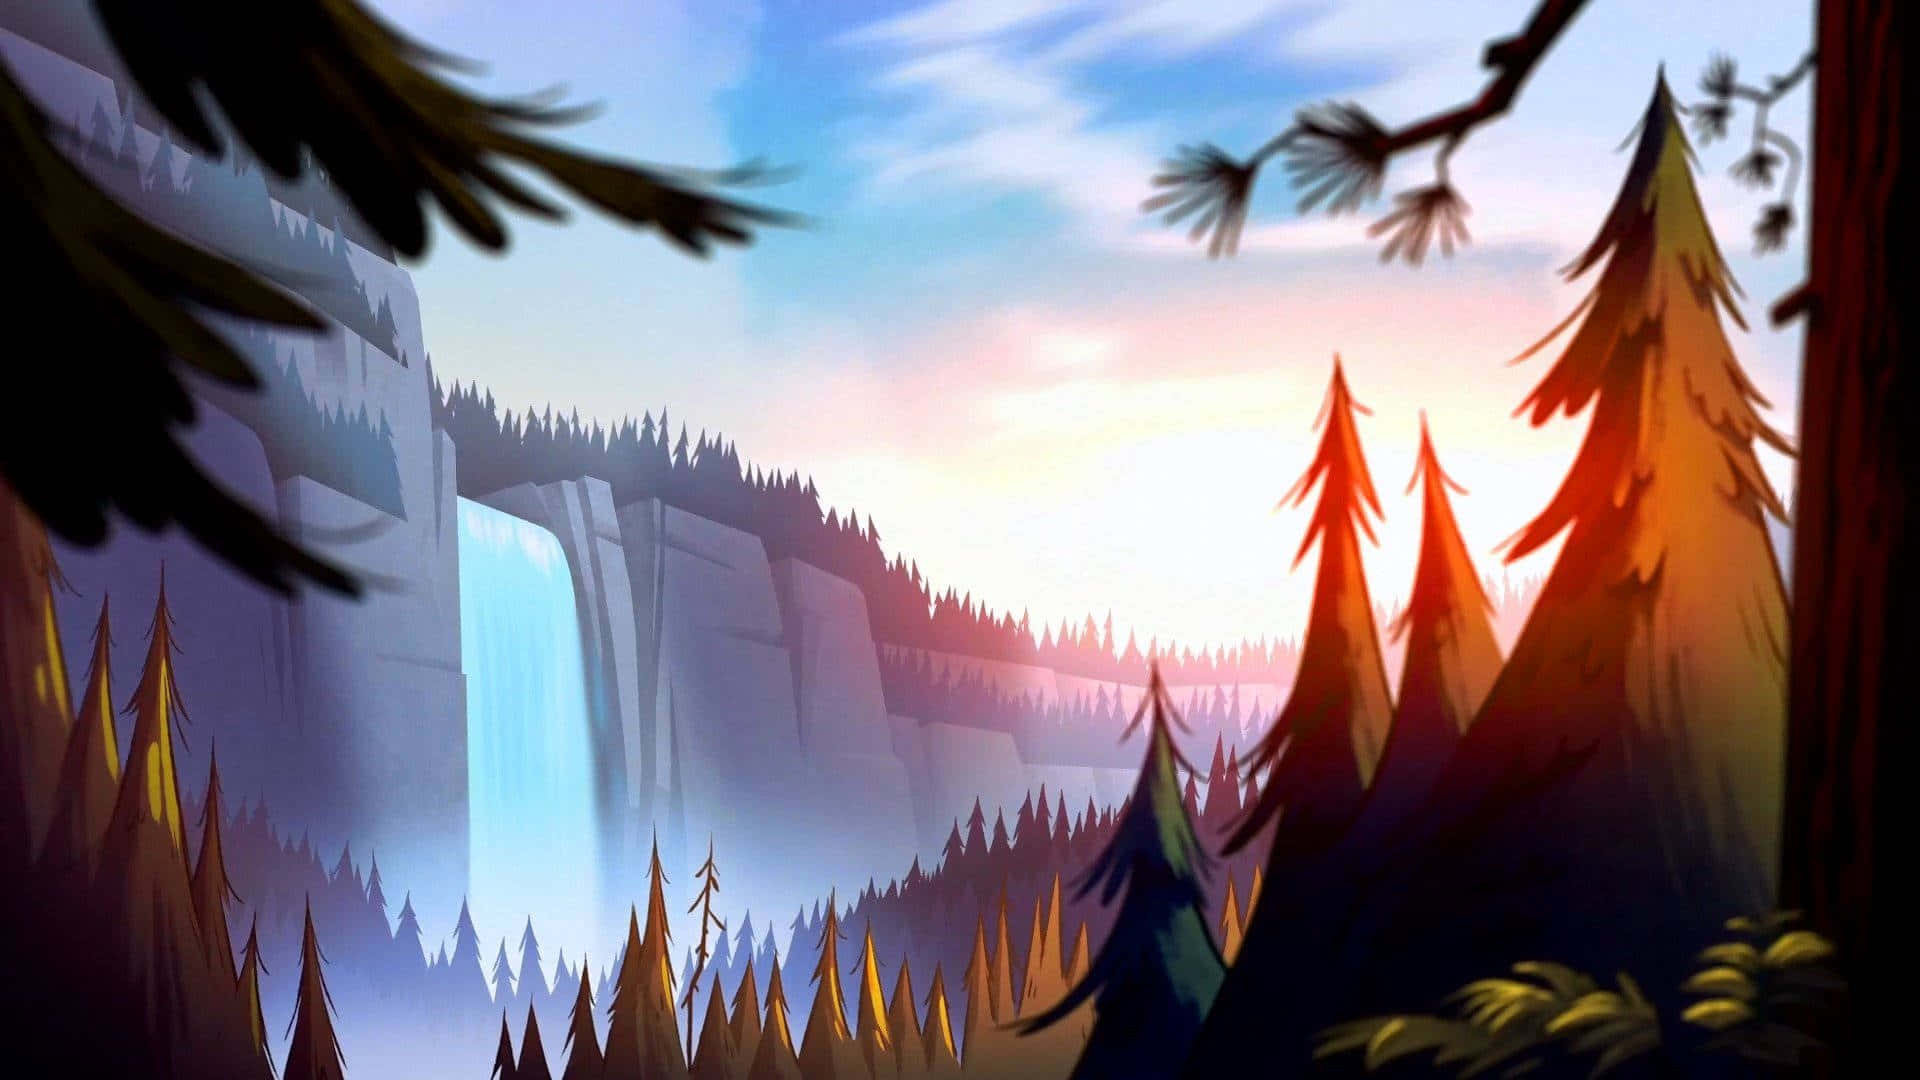 Majestic Waterfall Illustration Wallpaper